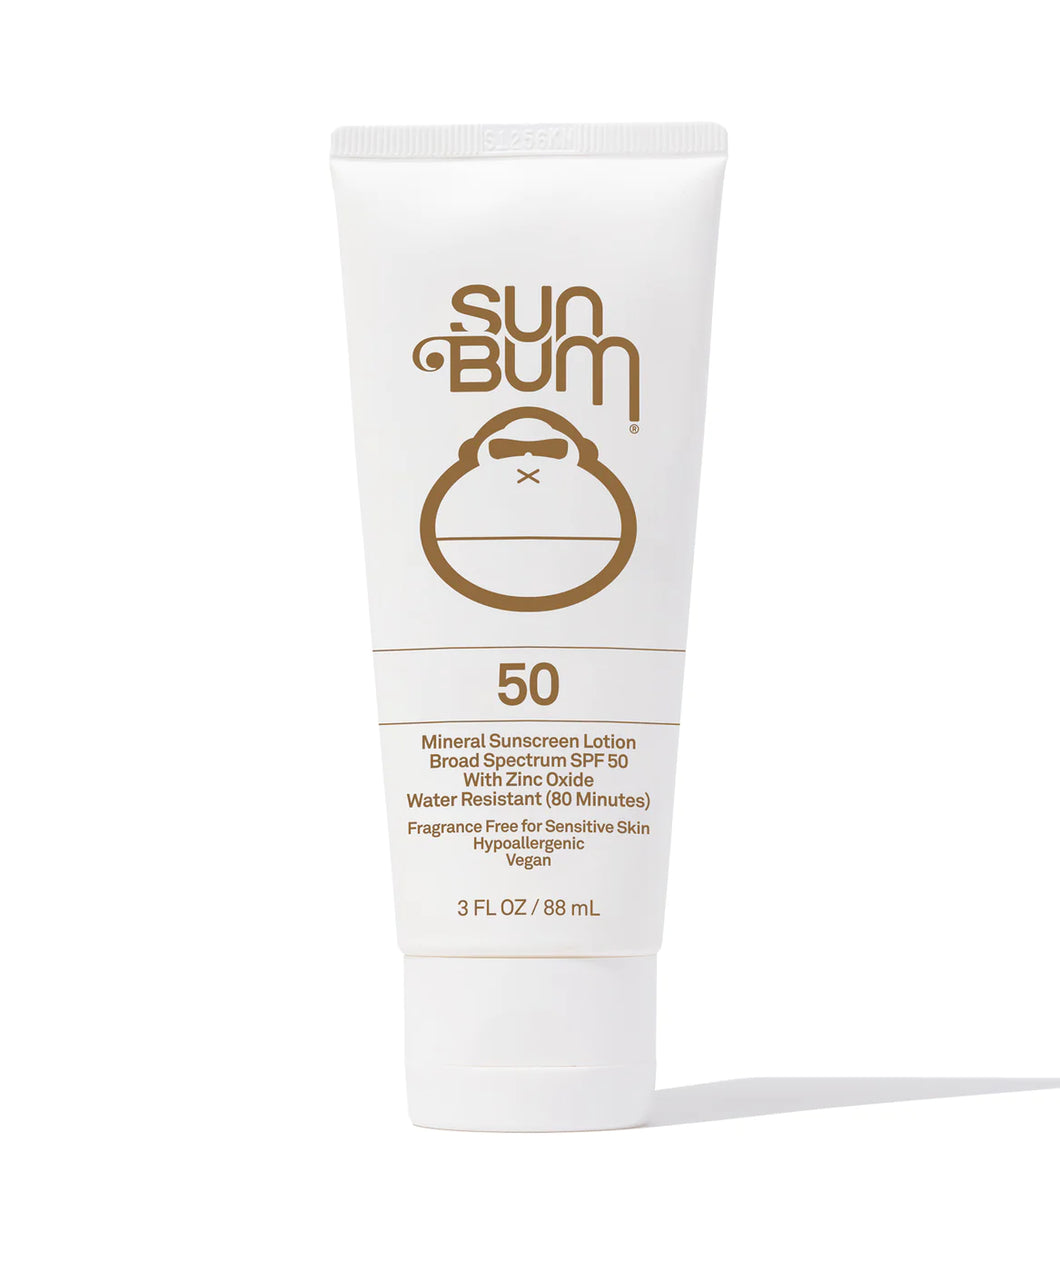 Sun Bum: Mineral SPF 50 Sunscreen Lotion